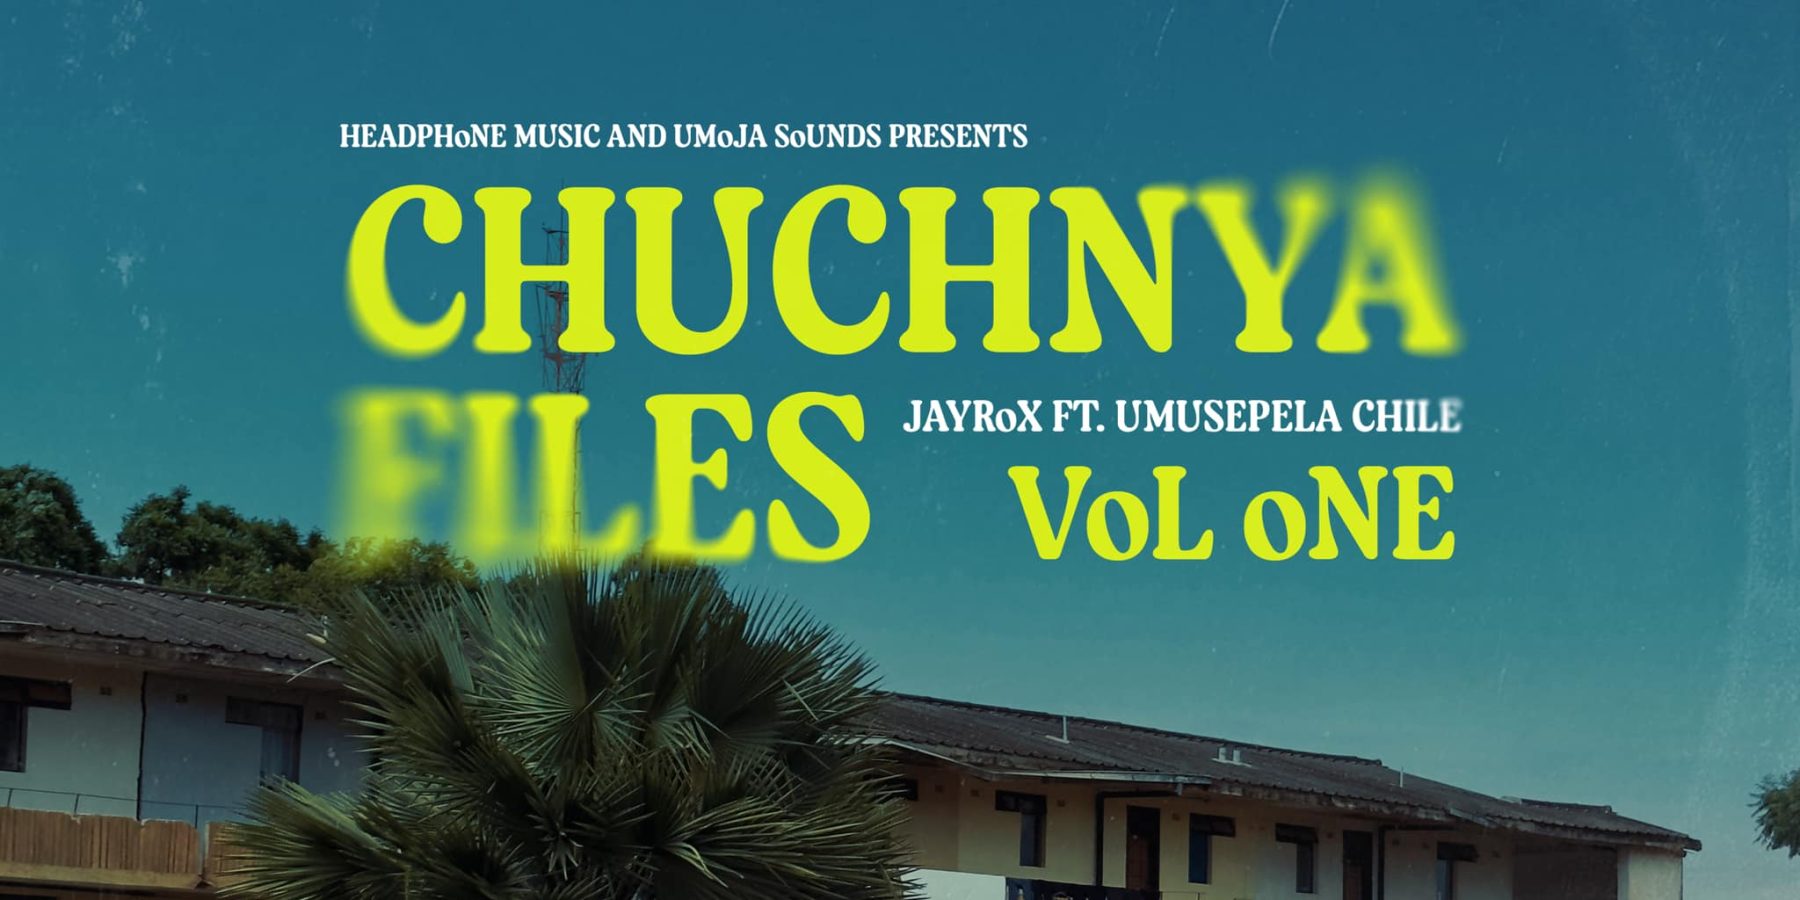 Jay Rox Ft Umusepela Chile - Chuchnya Files EP